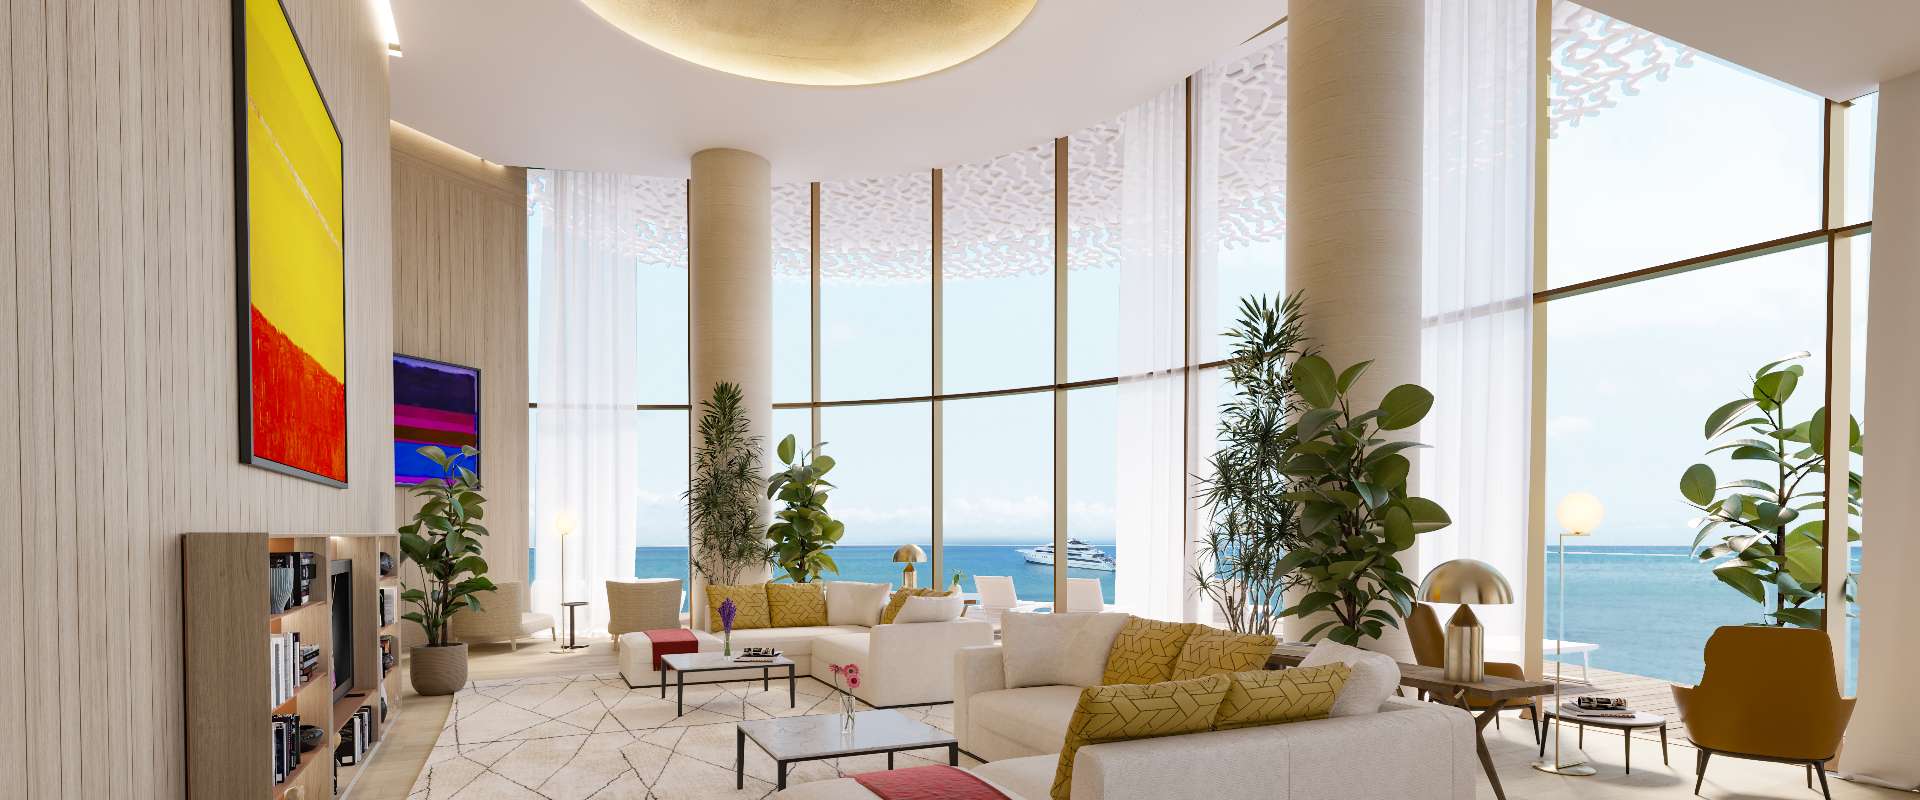 Bulgari Hotels Resort Dubai Residences